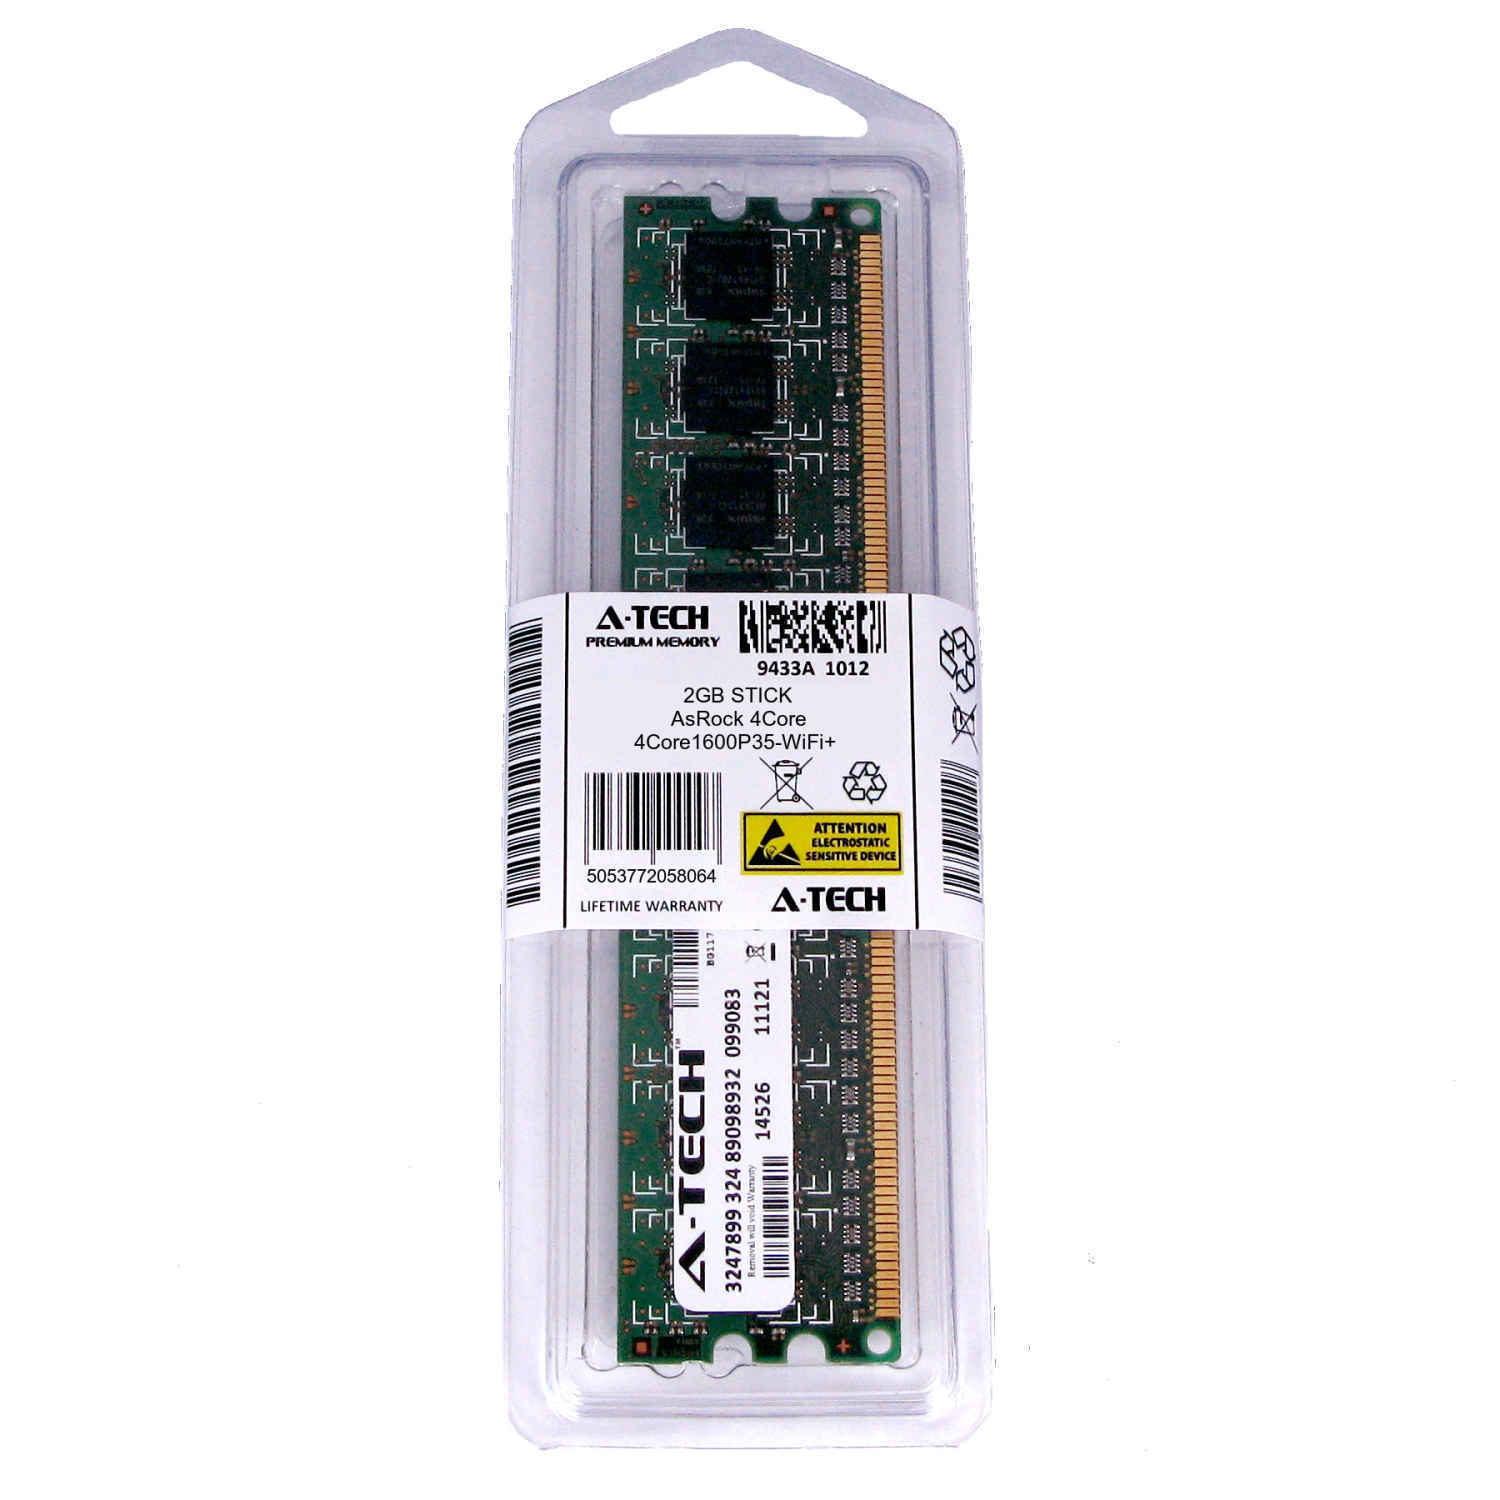 2GB DIMM AsRock 4Core 1600P35-WiFi+ 1600Twins-P35 1600Twins-P35D Ram Memory